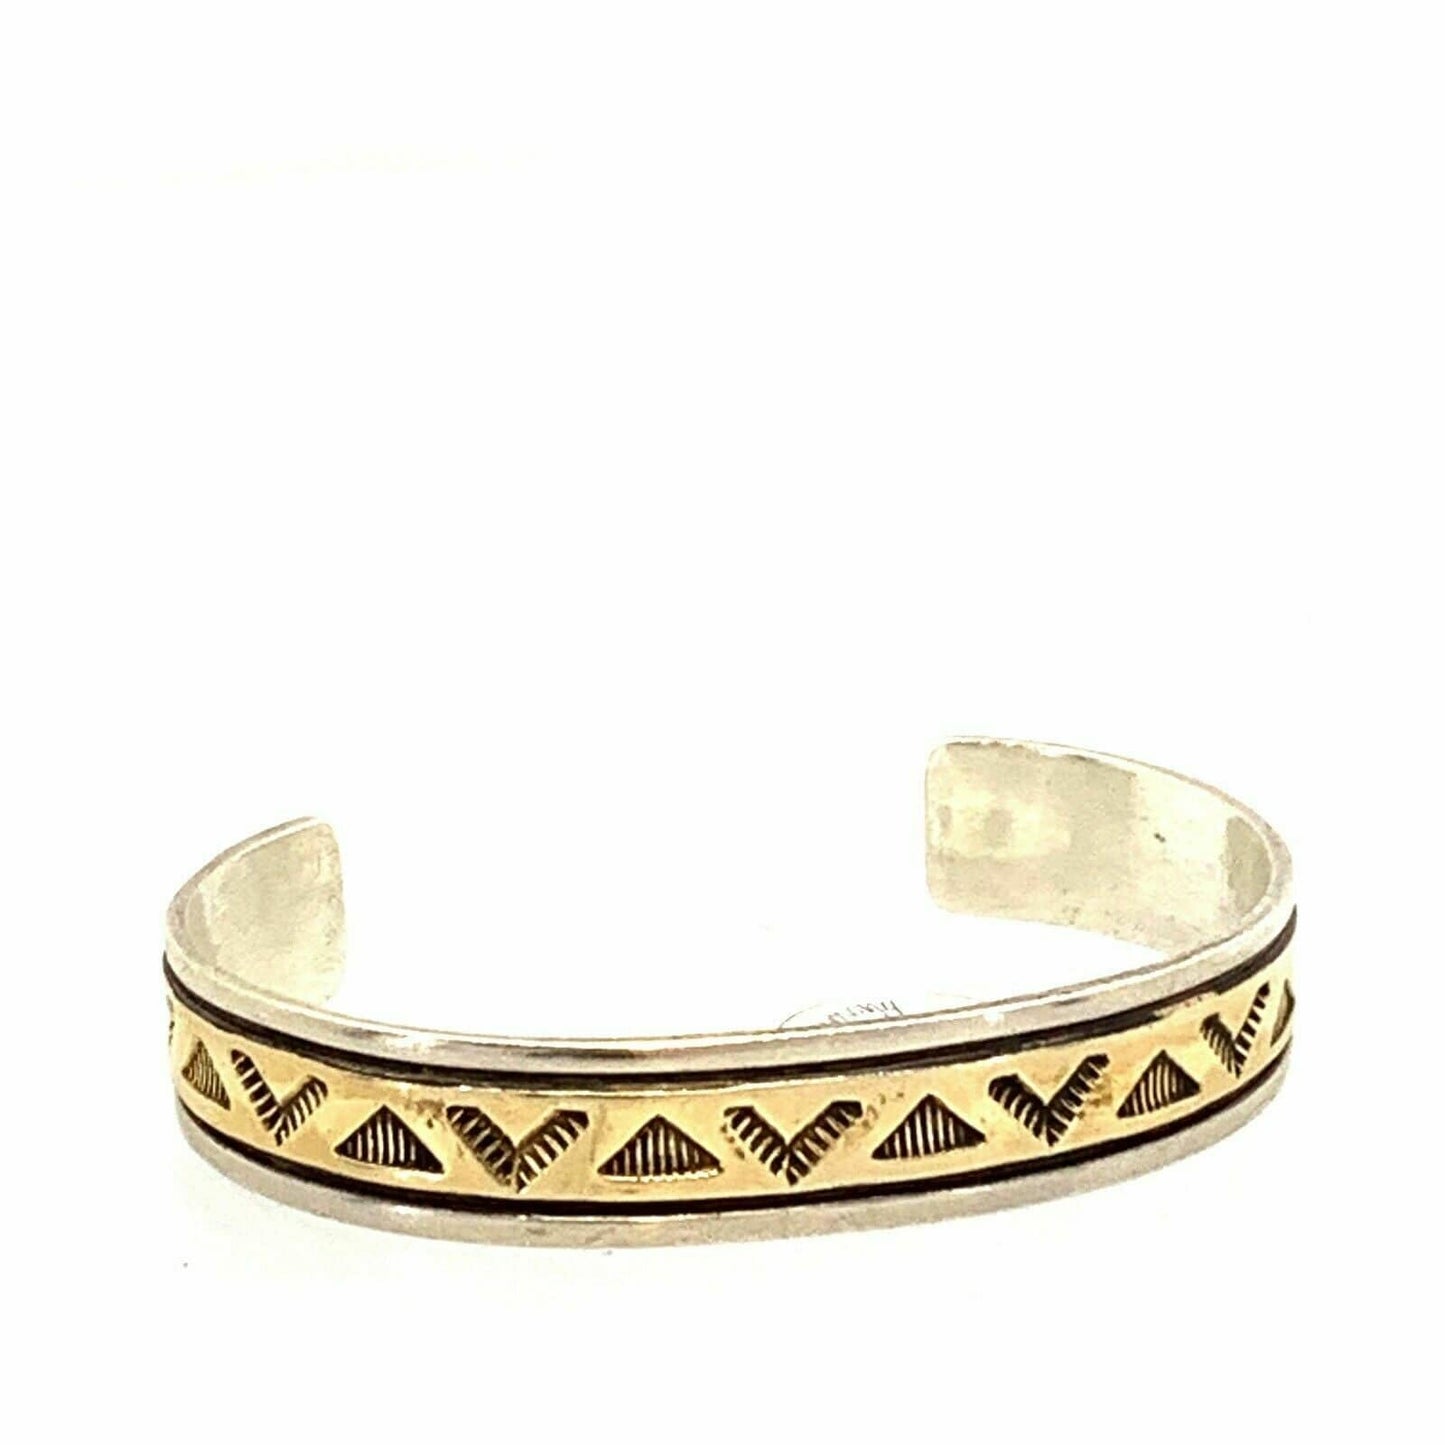 Elegant Oscar Alexius Vintage Navajo 14k Gold & Sterling Silver Cuff Bracelet - 6.75”